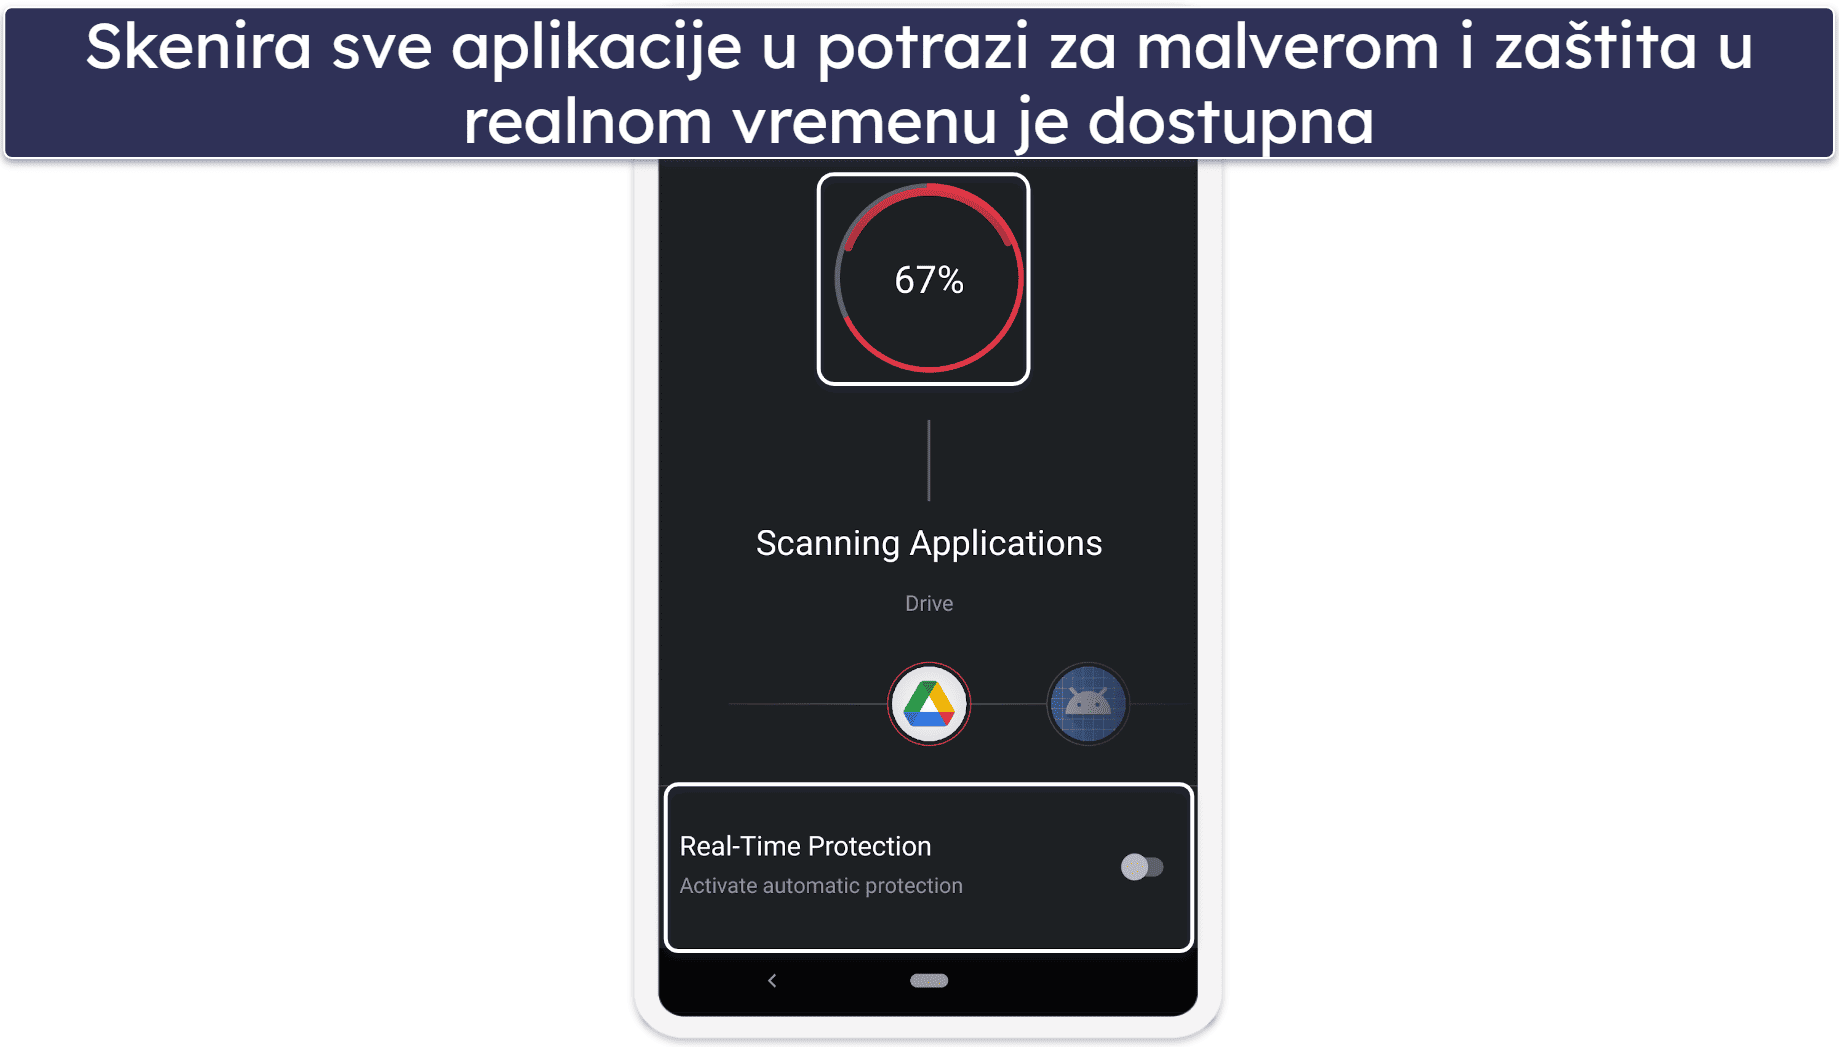 Mobilna aplikacija TotalAV-a